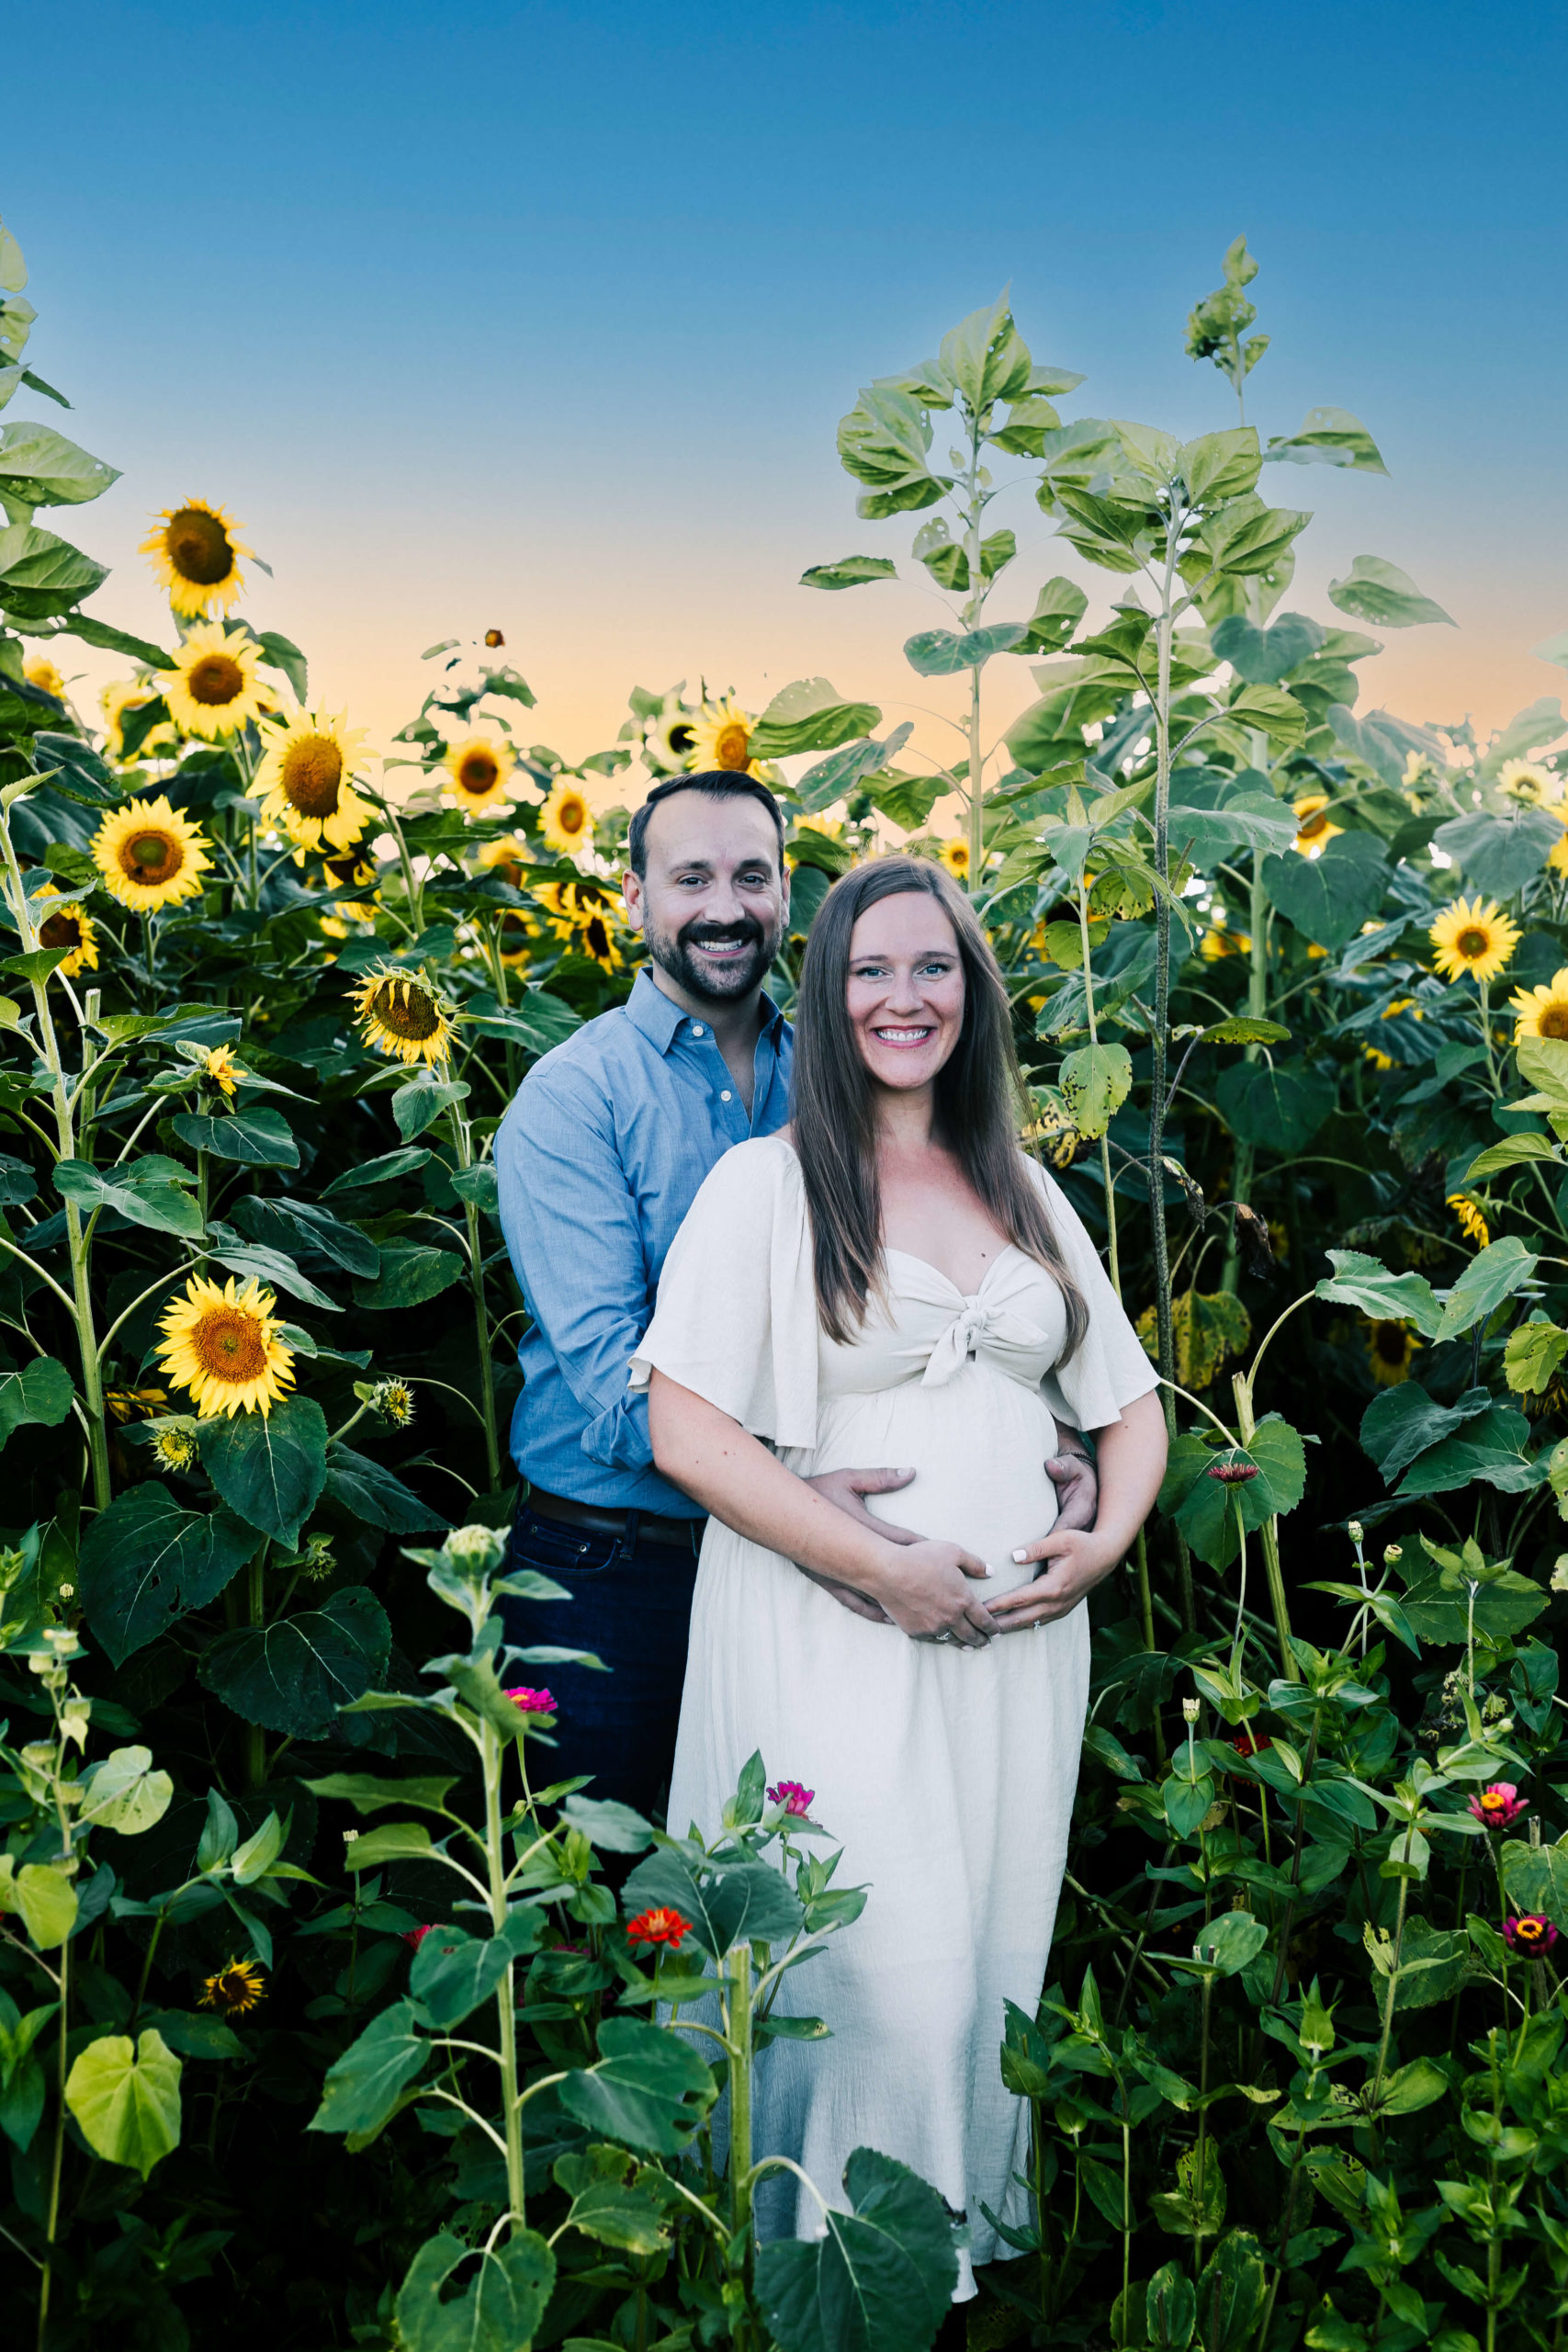 maternity photos taken at Lannon sunflower farm by a Milwaukee maternity photographer